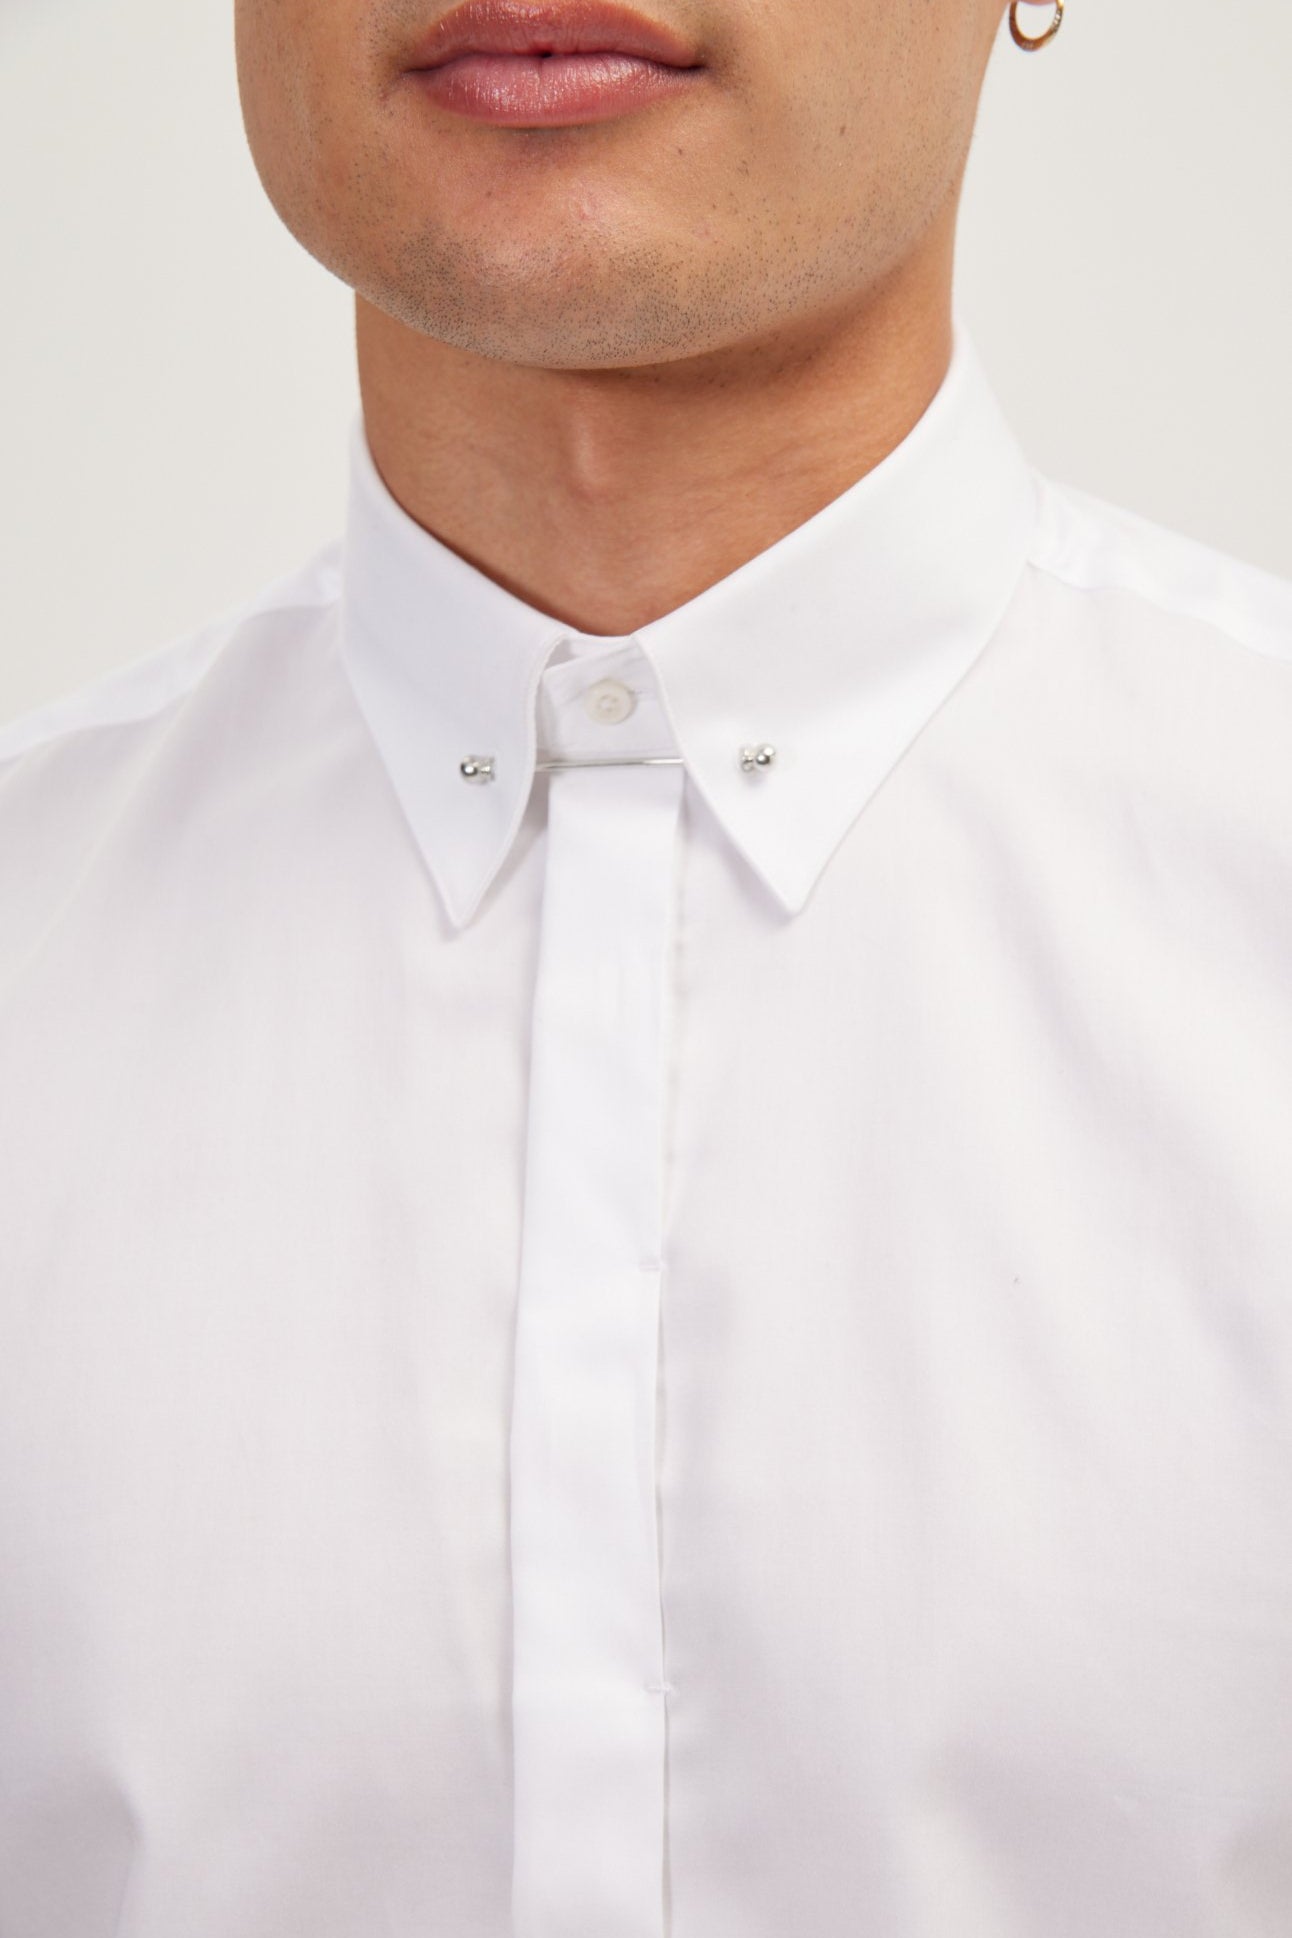 Tie-Bar Hidden Placket Dress Shirt - White - Ron Tomson